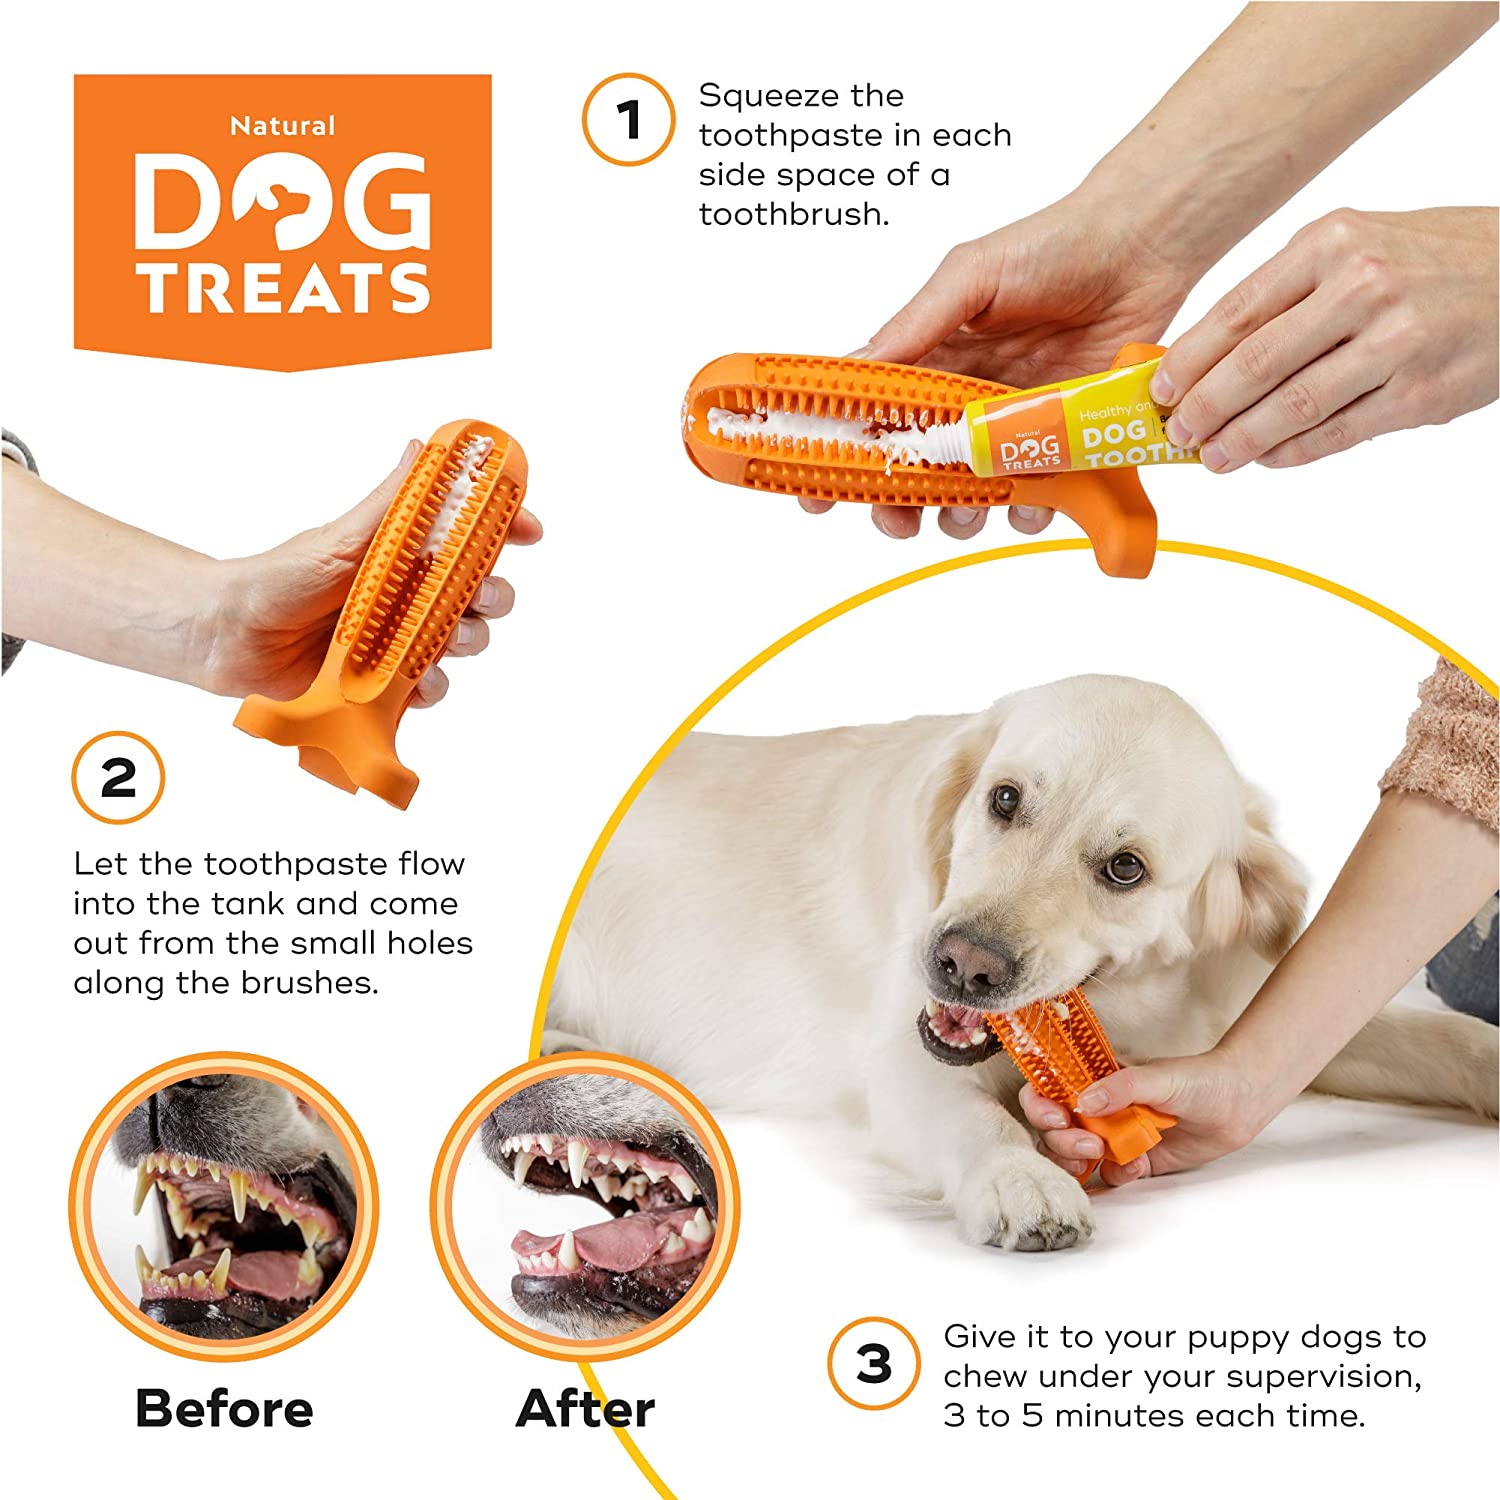  Natural Dog Treats Cepillo de Dientes y Dentífrico Set para Perros, 100% Natural Caucho Dog Brushing Stick, Juguete para Masticar 